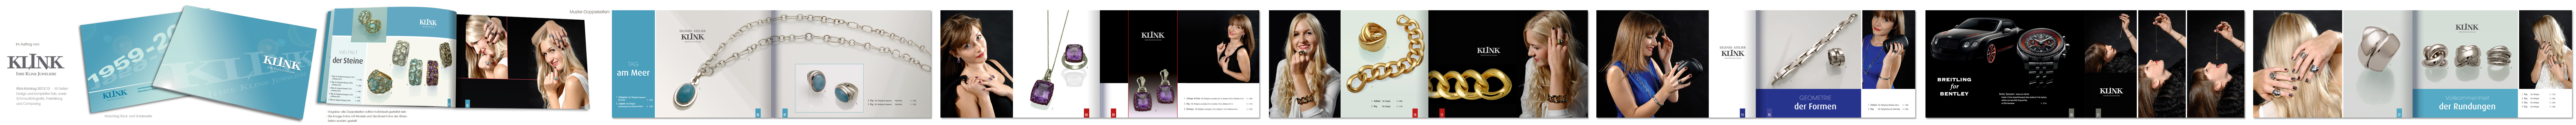 Katalog Klink Juweliere 2012